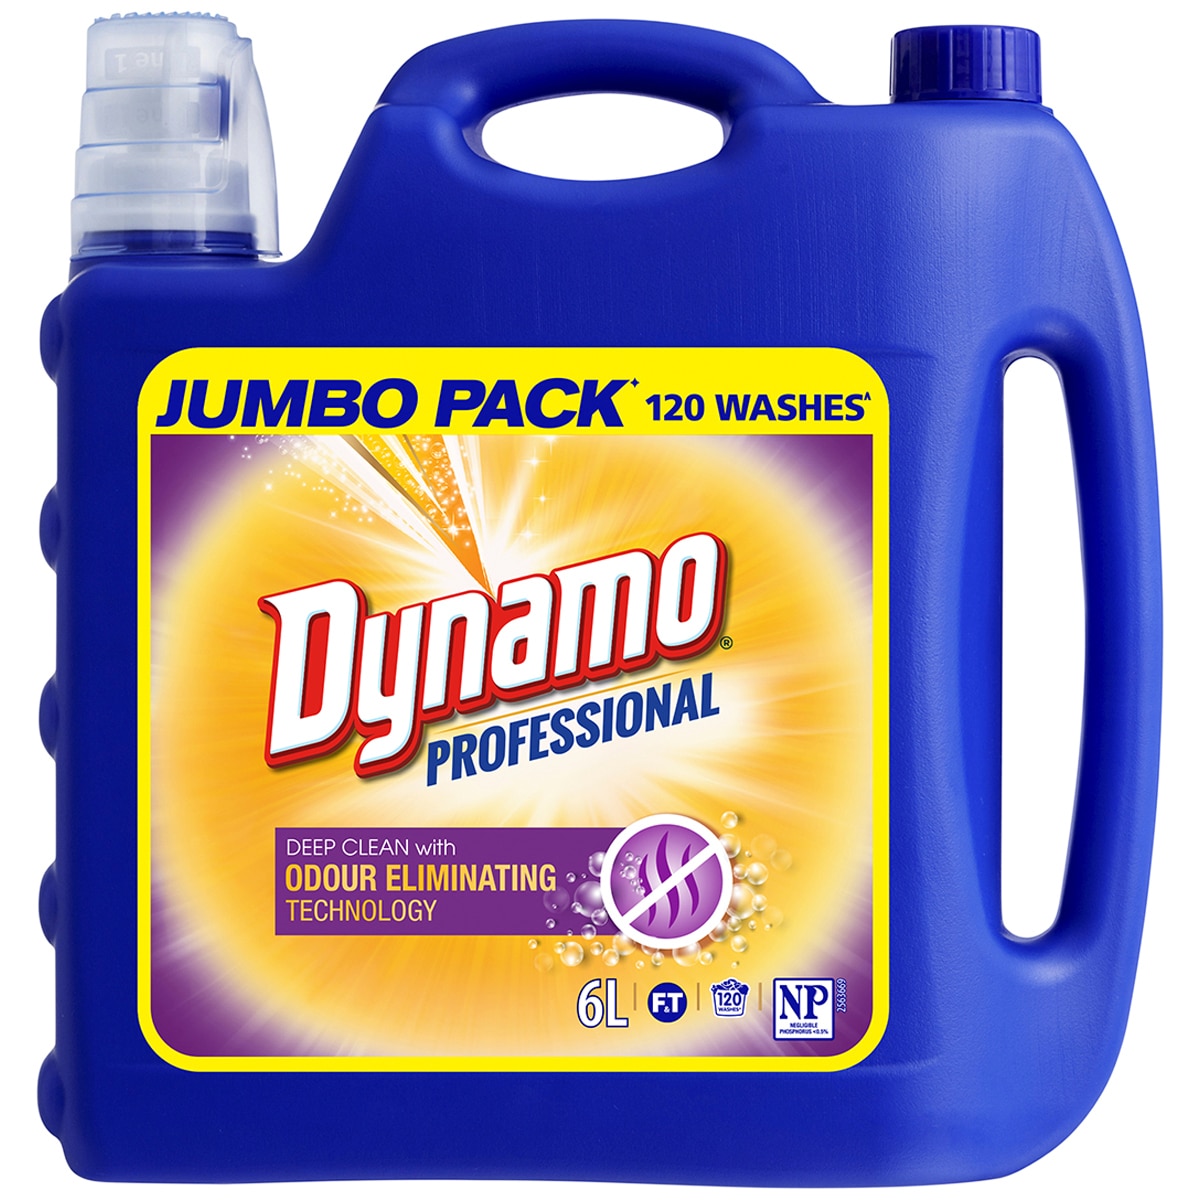 Dynamo Professional Odour Eliminating Laundry Liquid 6L